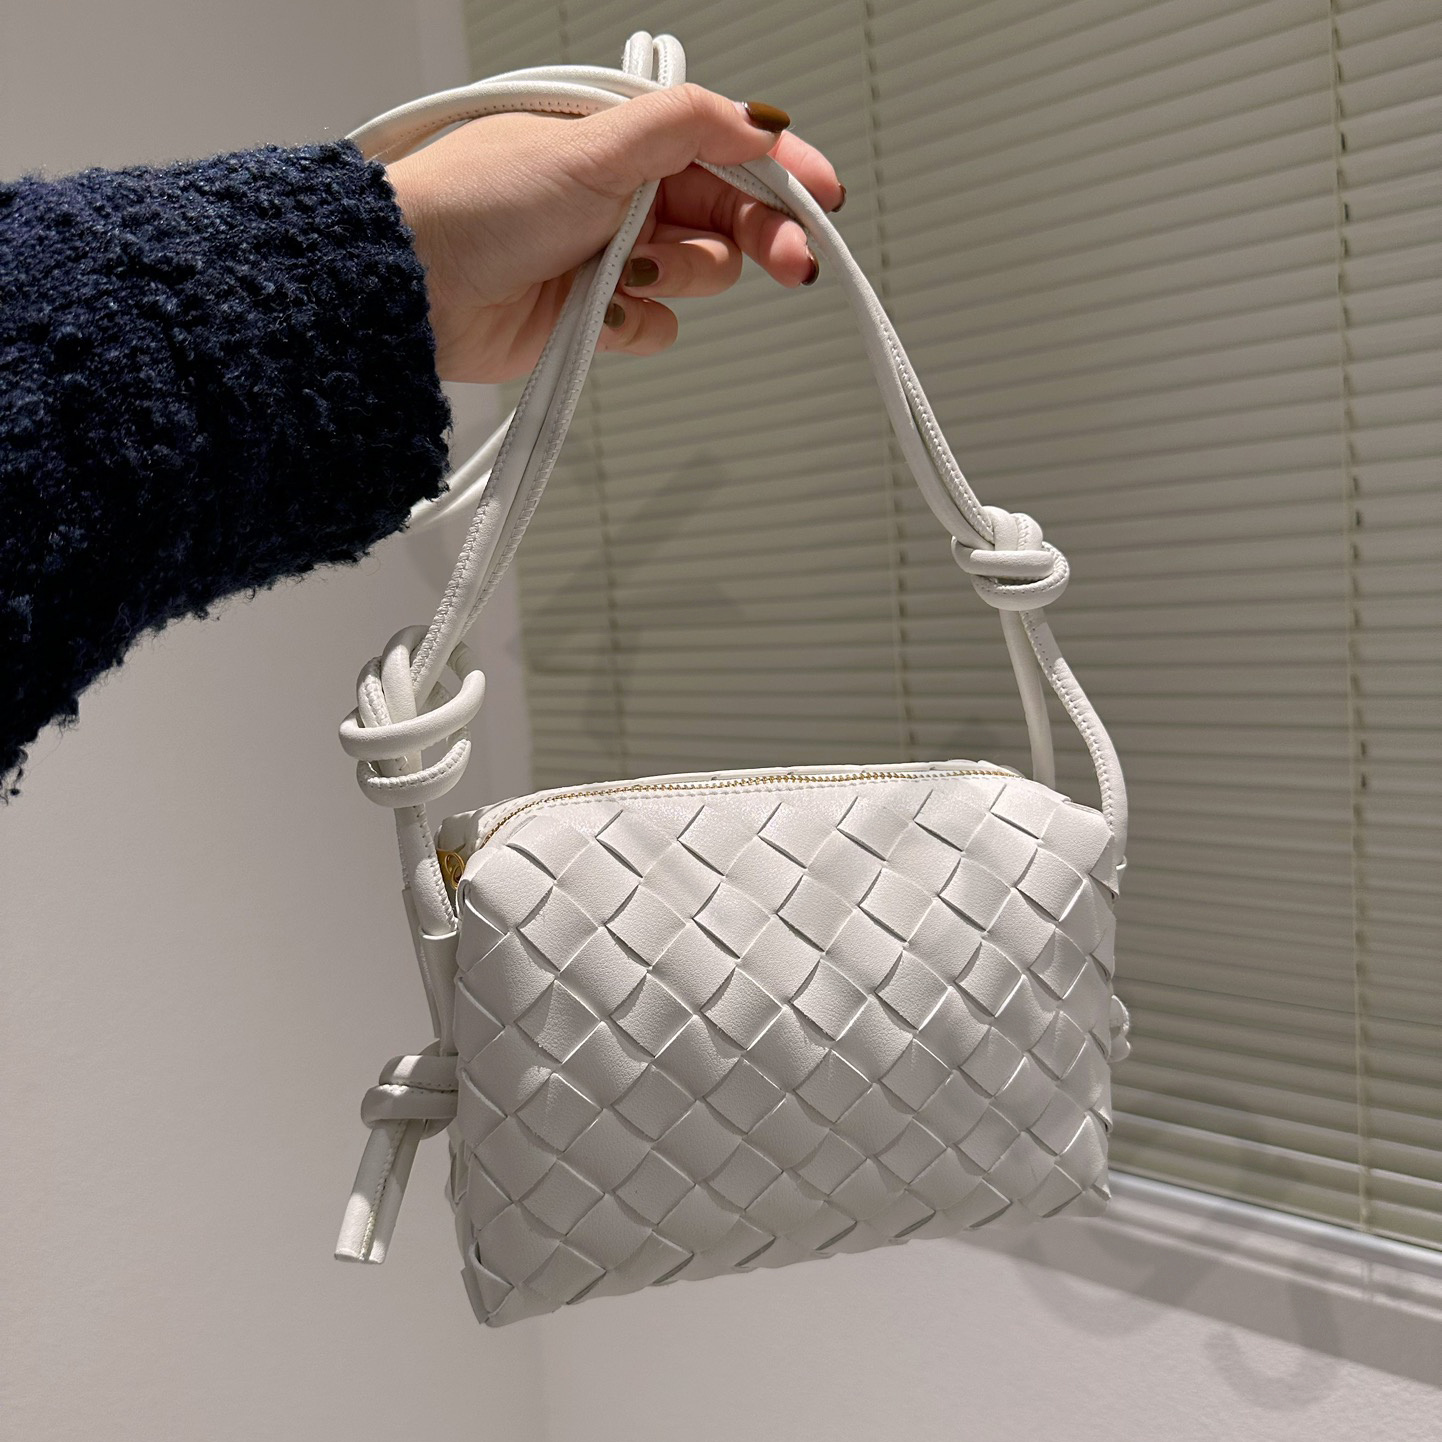 loop camera bags for women woven small bag brand plaid designer bag mini cloud hobo handbag fashion leather shoulder messenger bags designer woman knitting handbag